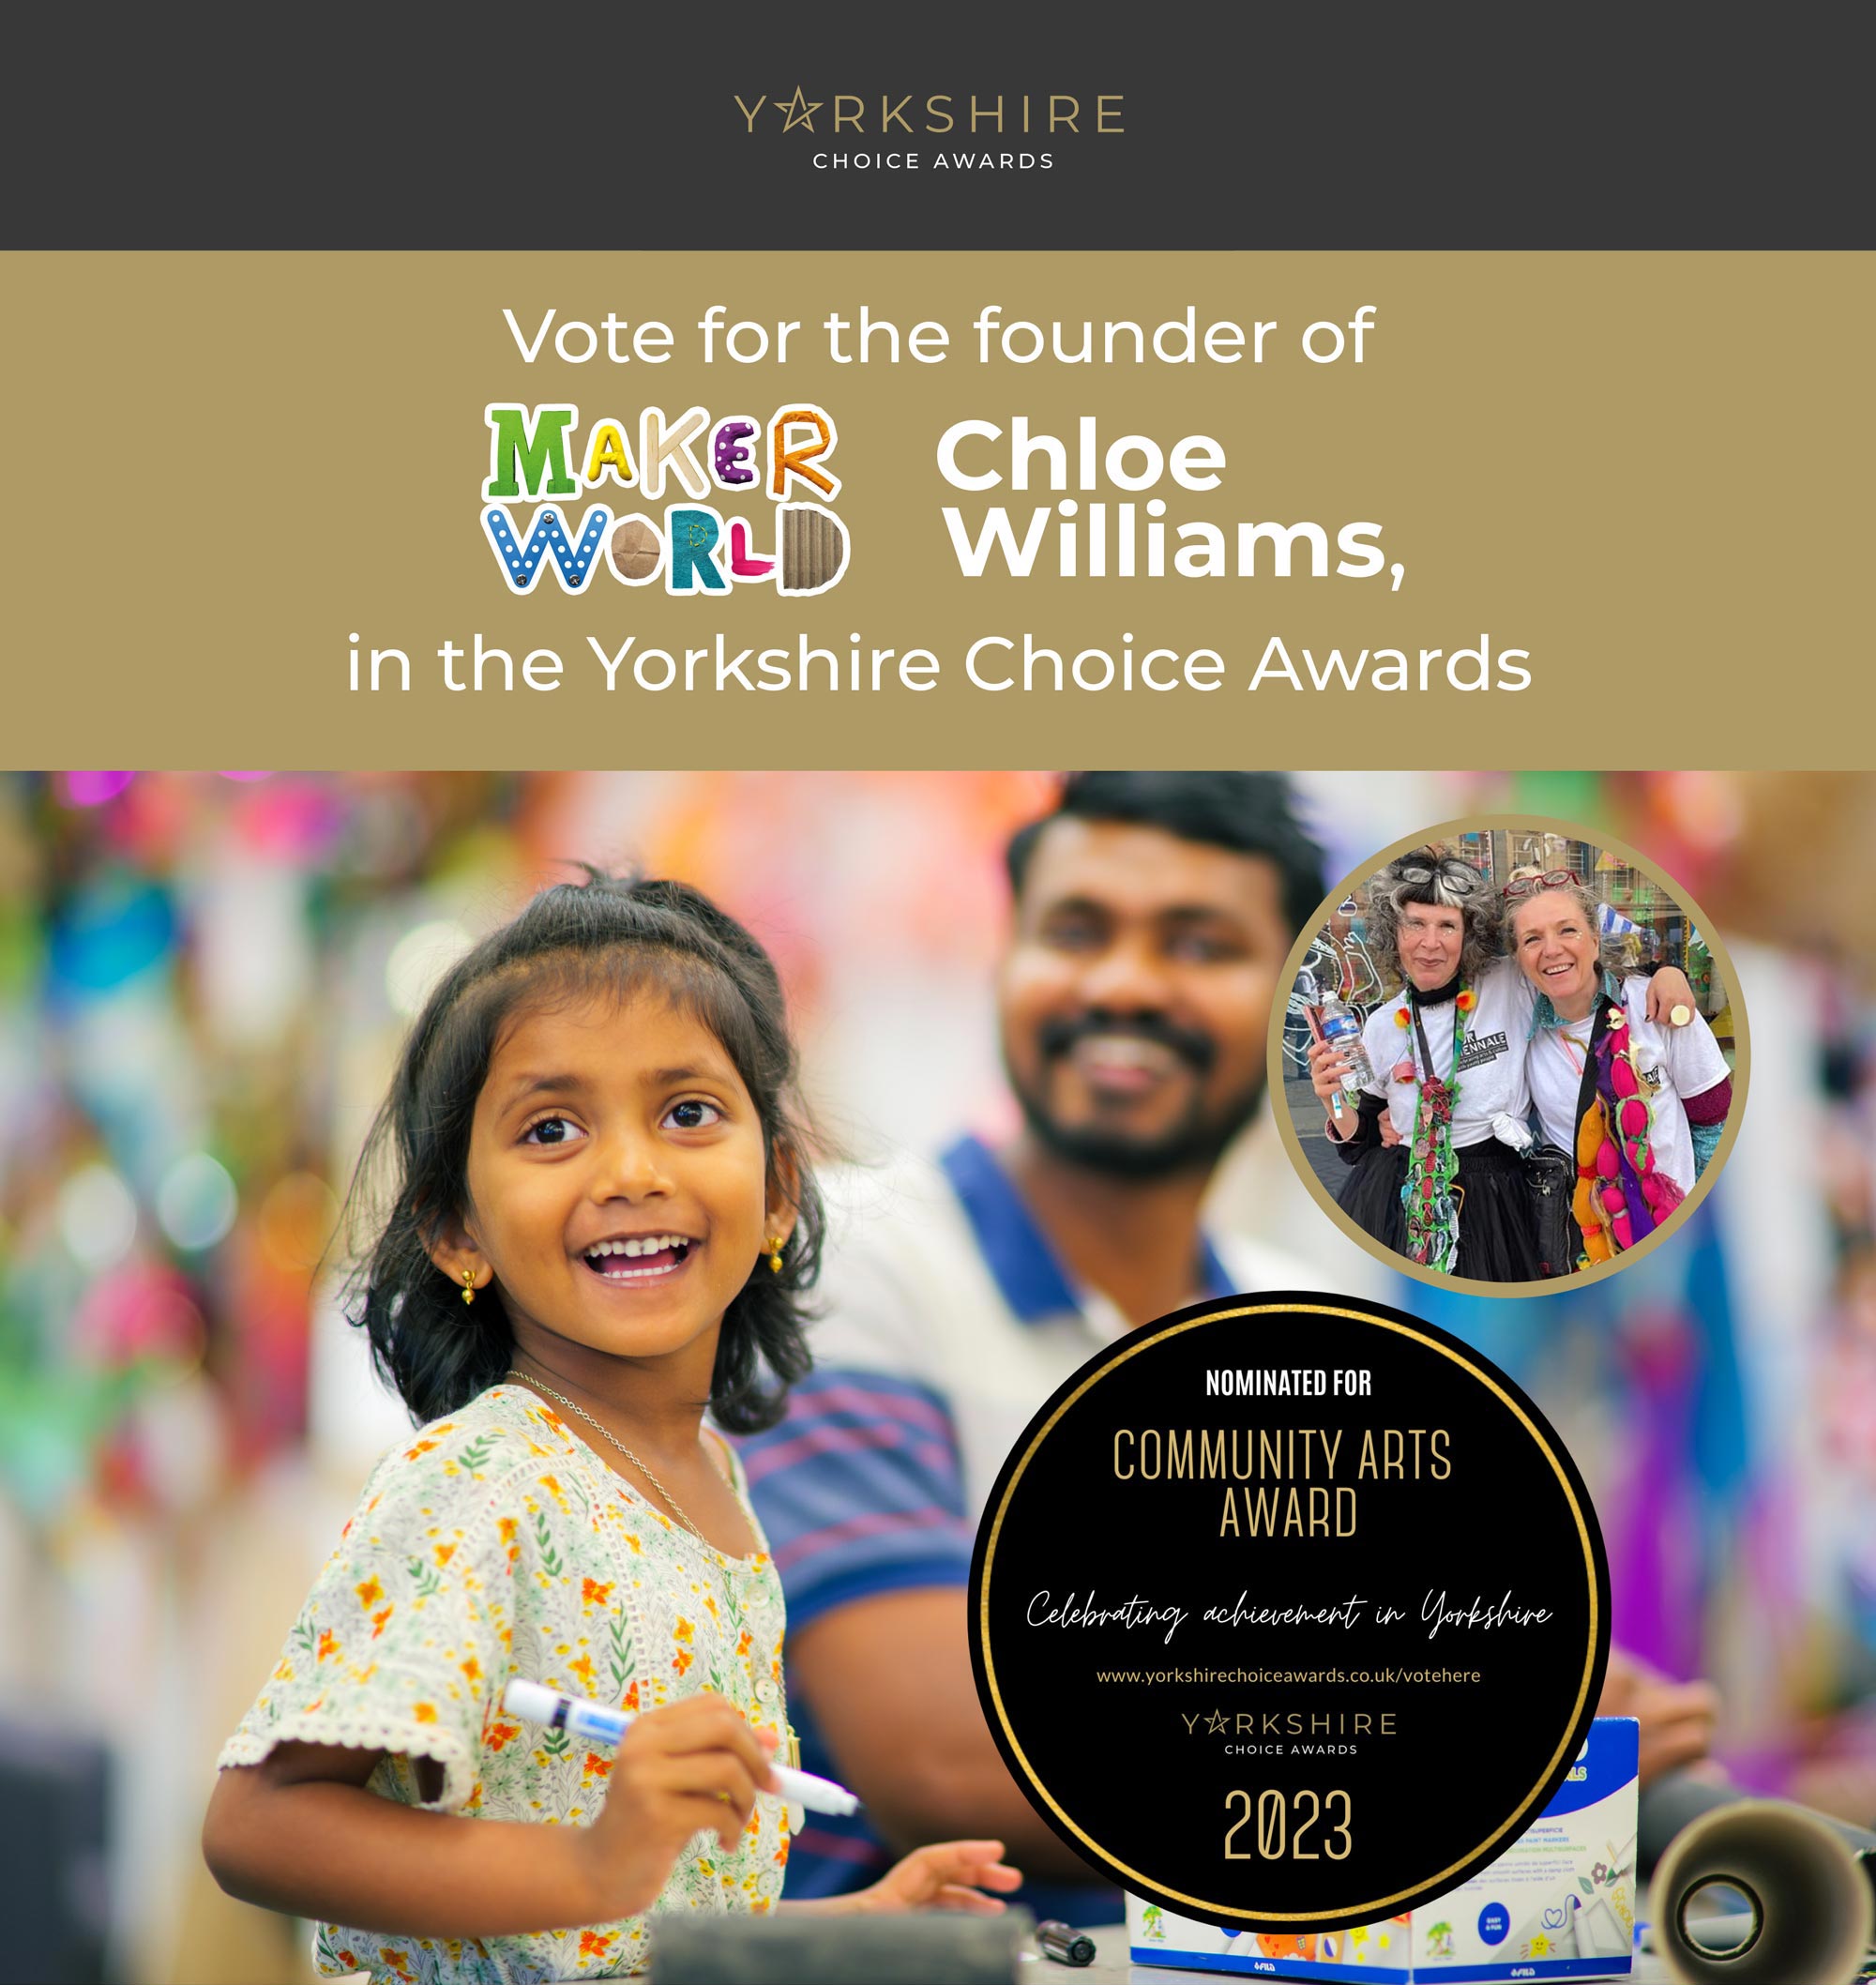 Yorkshire Choice Awards nomination